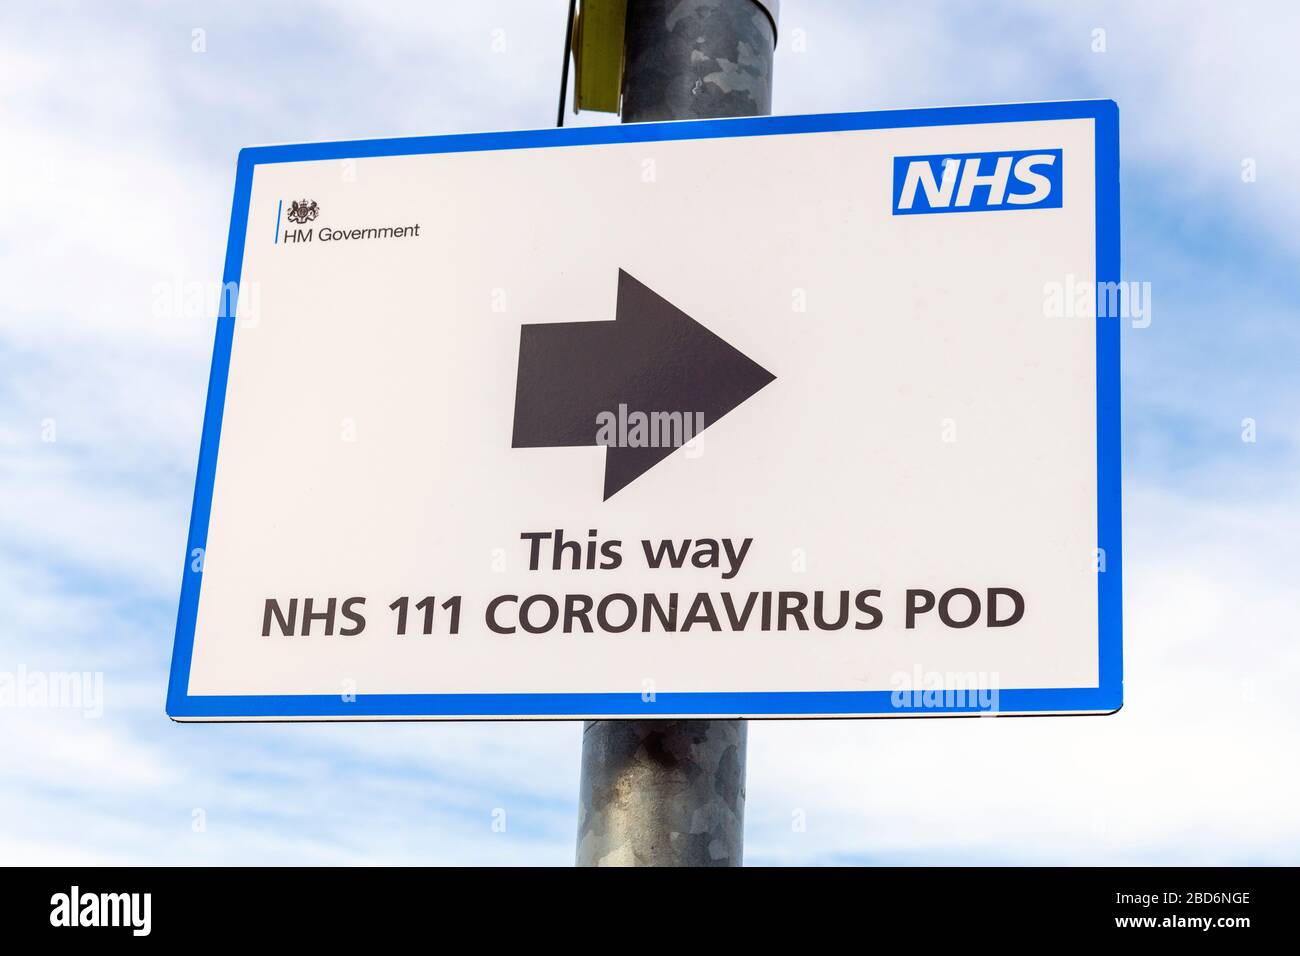 Coronavirus UK NHS sign showing way to Covid19 assessment pod, England. Stock Photo